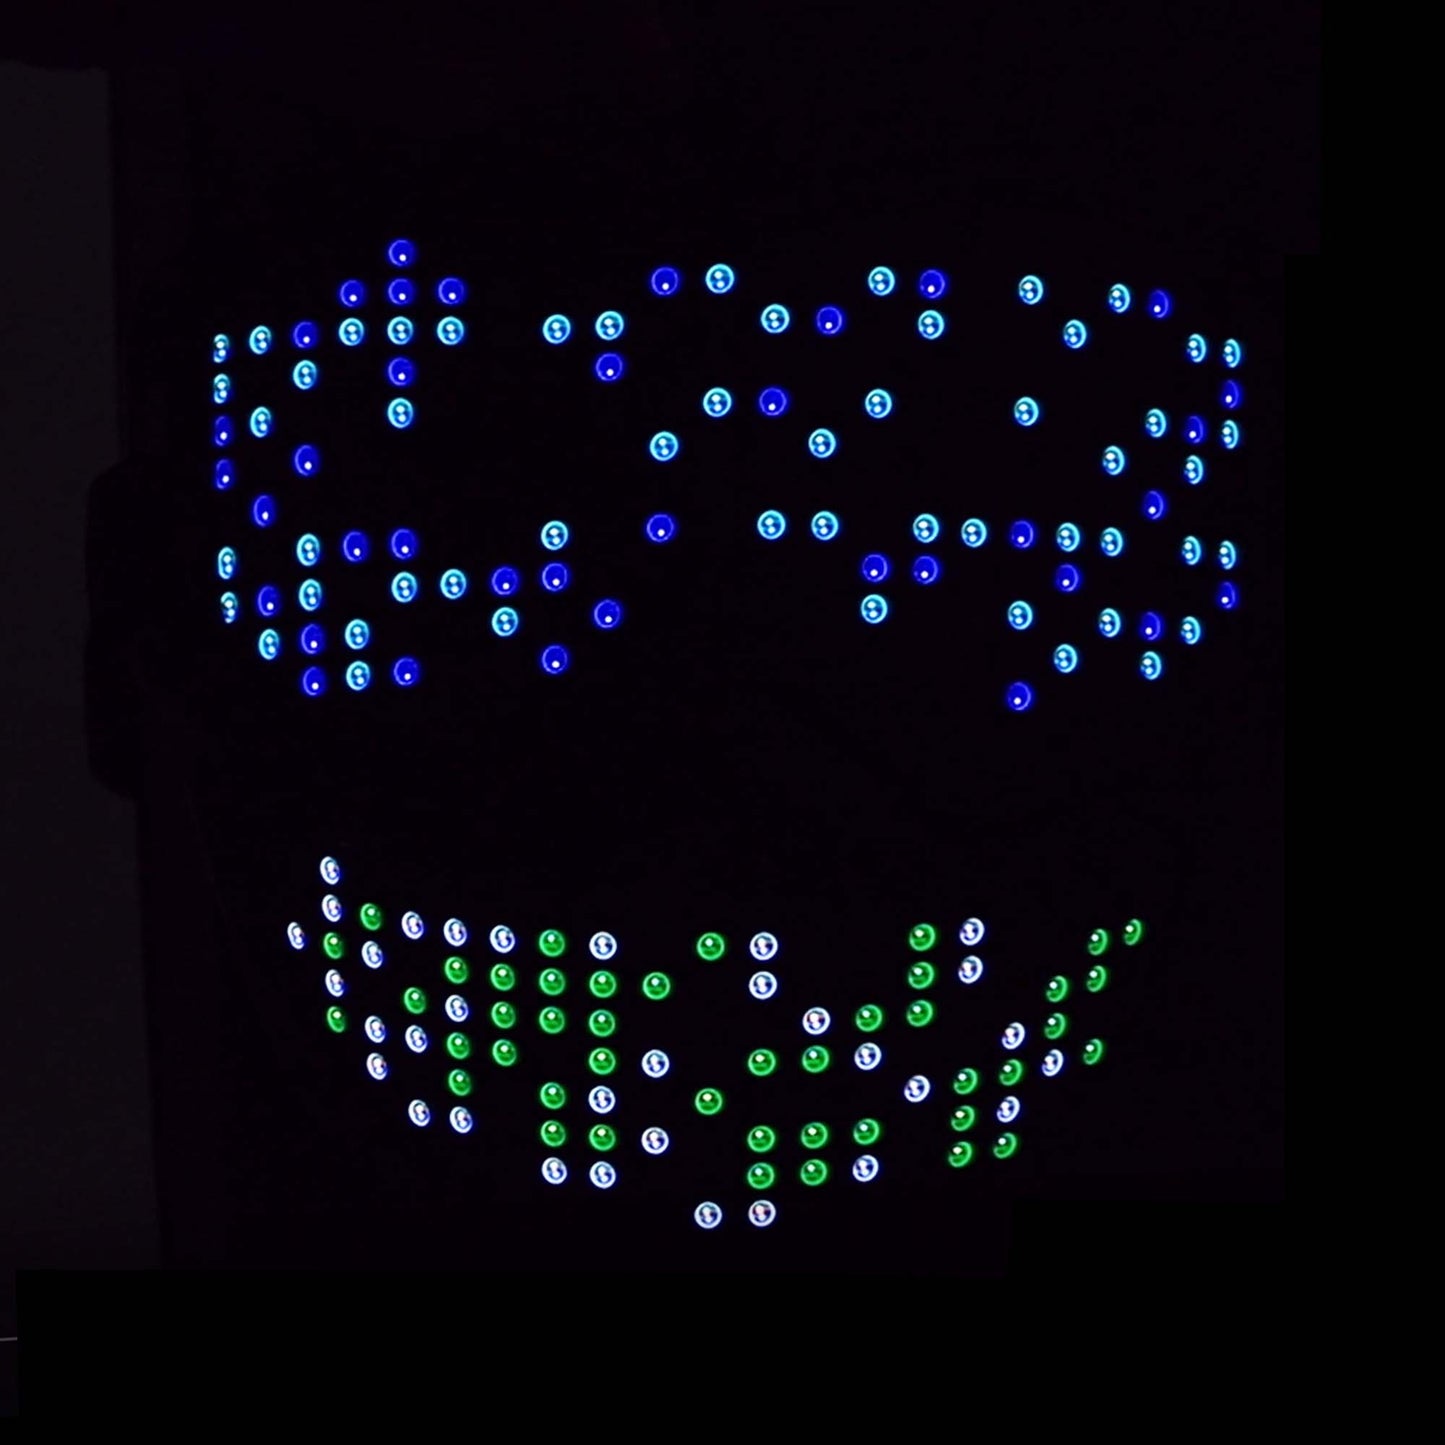 Soulsfeng X Tface LED Mask